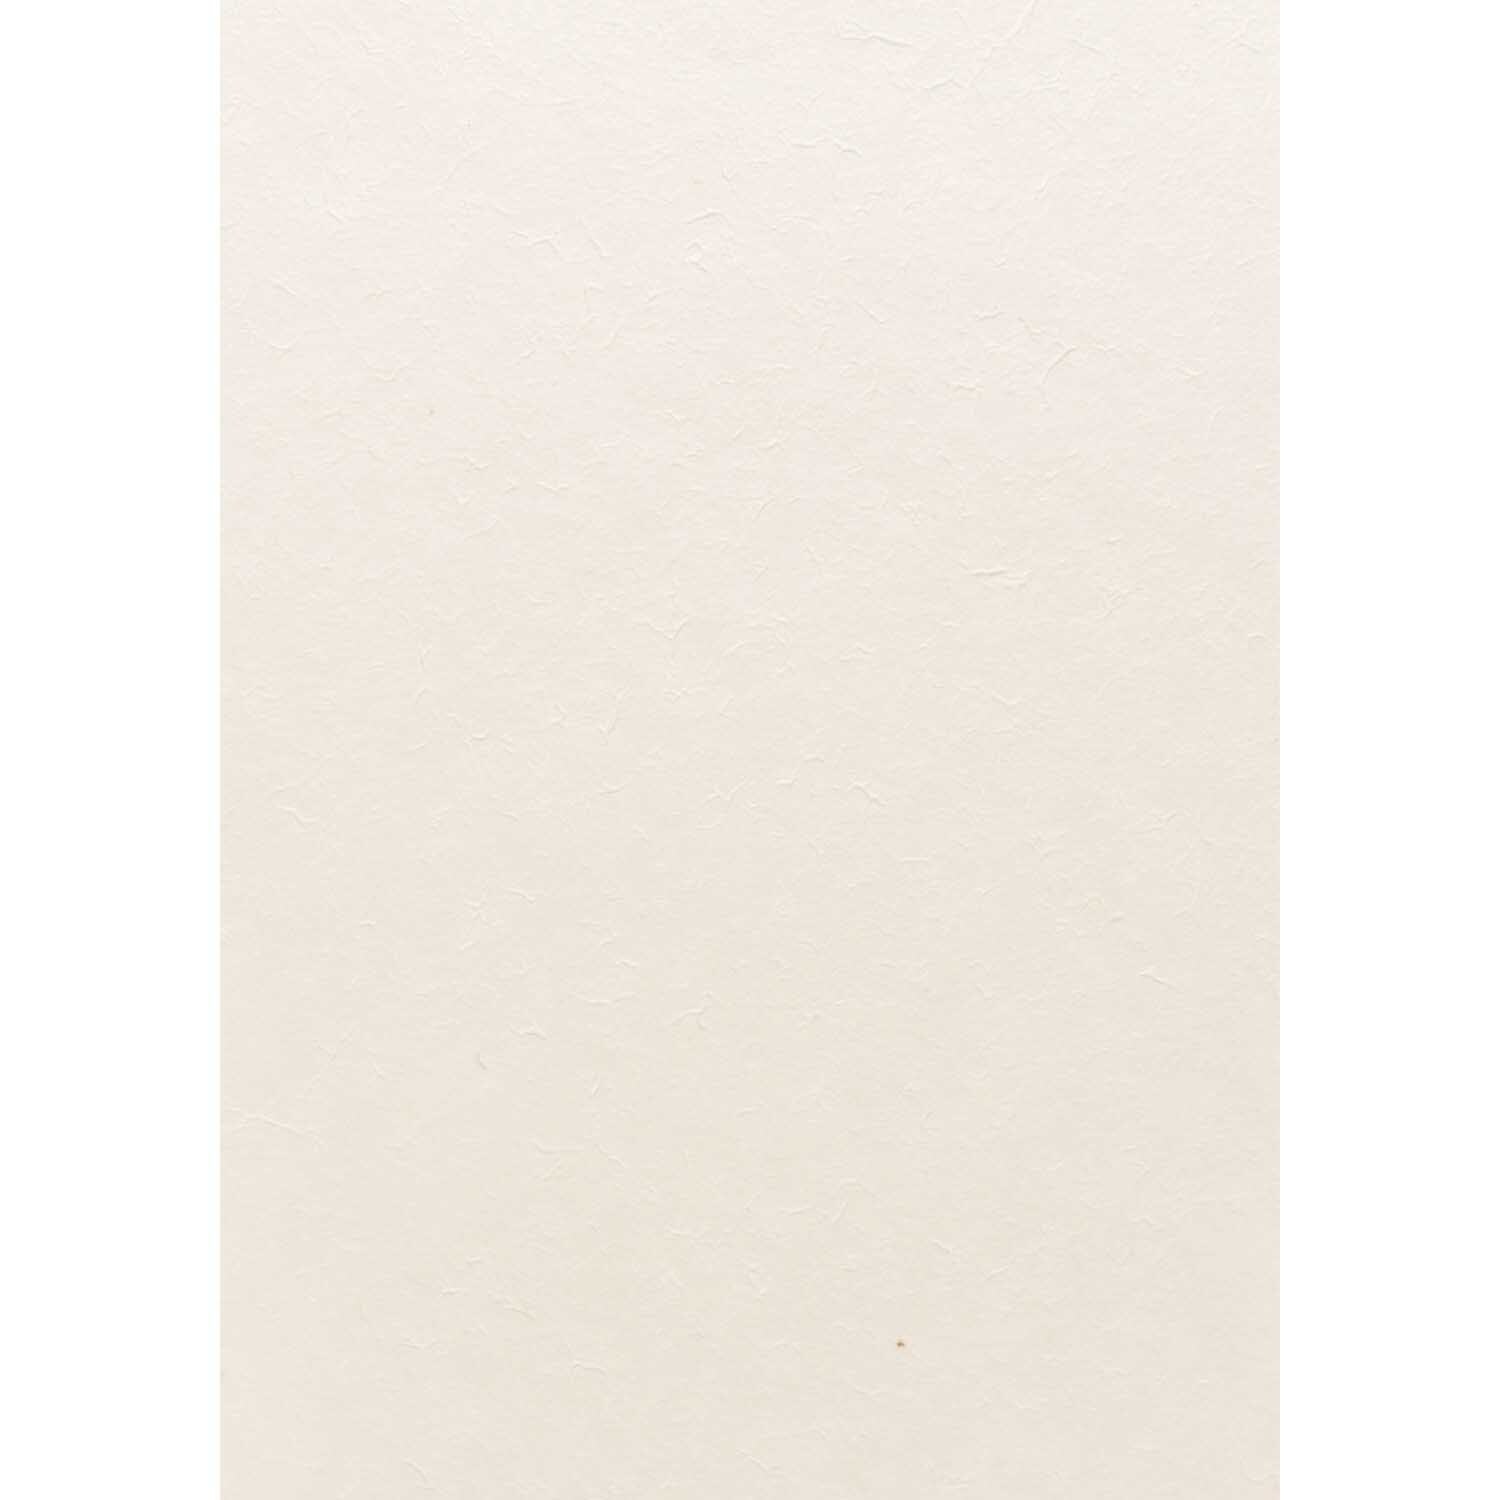 Mulberry Paper 55x40cm 80g/m²